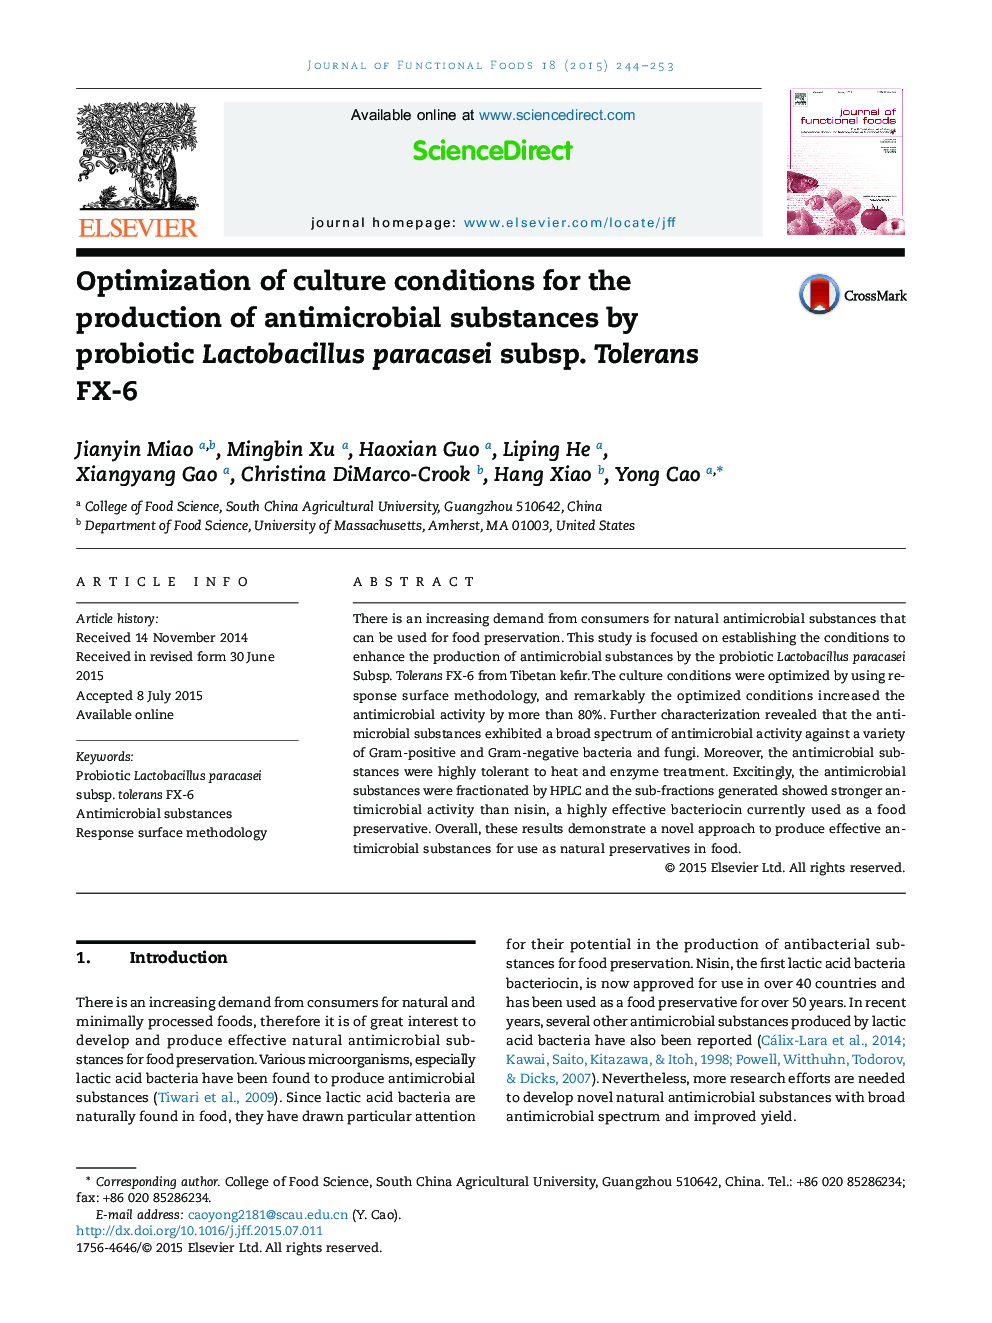 Optimization of culture conditions for the production of antimicrobial substances by probiotic Lactobacillus paracasei subsp. Tolerans FX-6